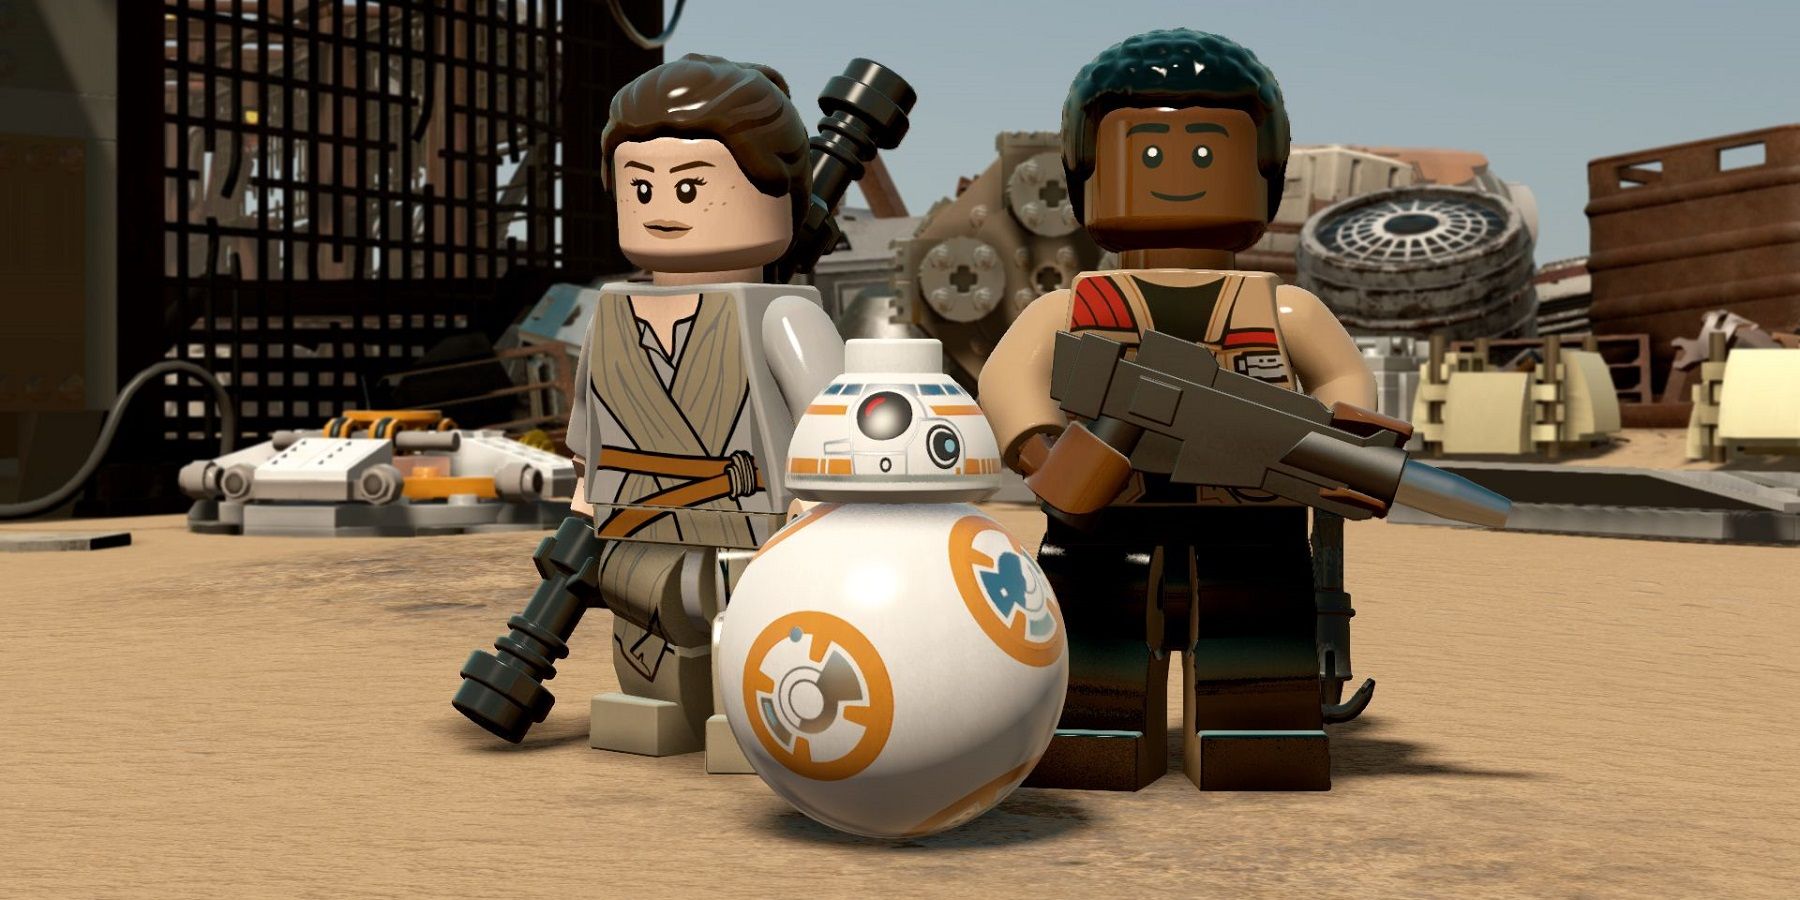 Lego Star Wars Force Awakens. Finn, Rey and BB-8 standing in the Jakku desert